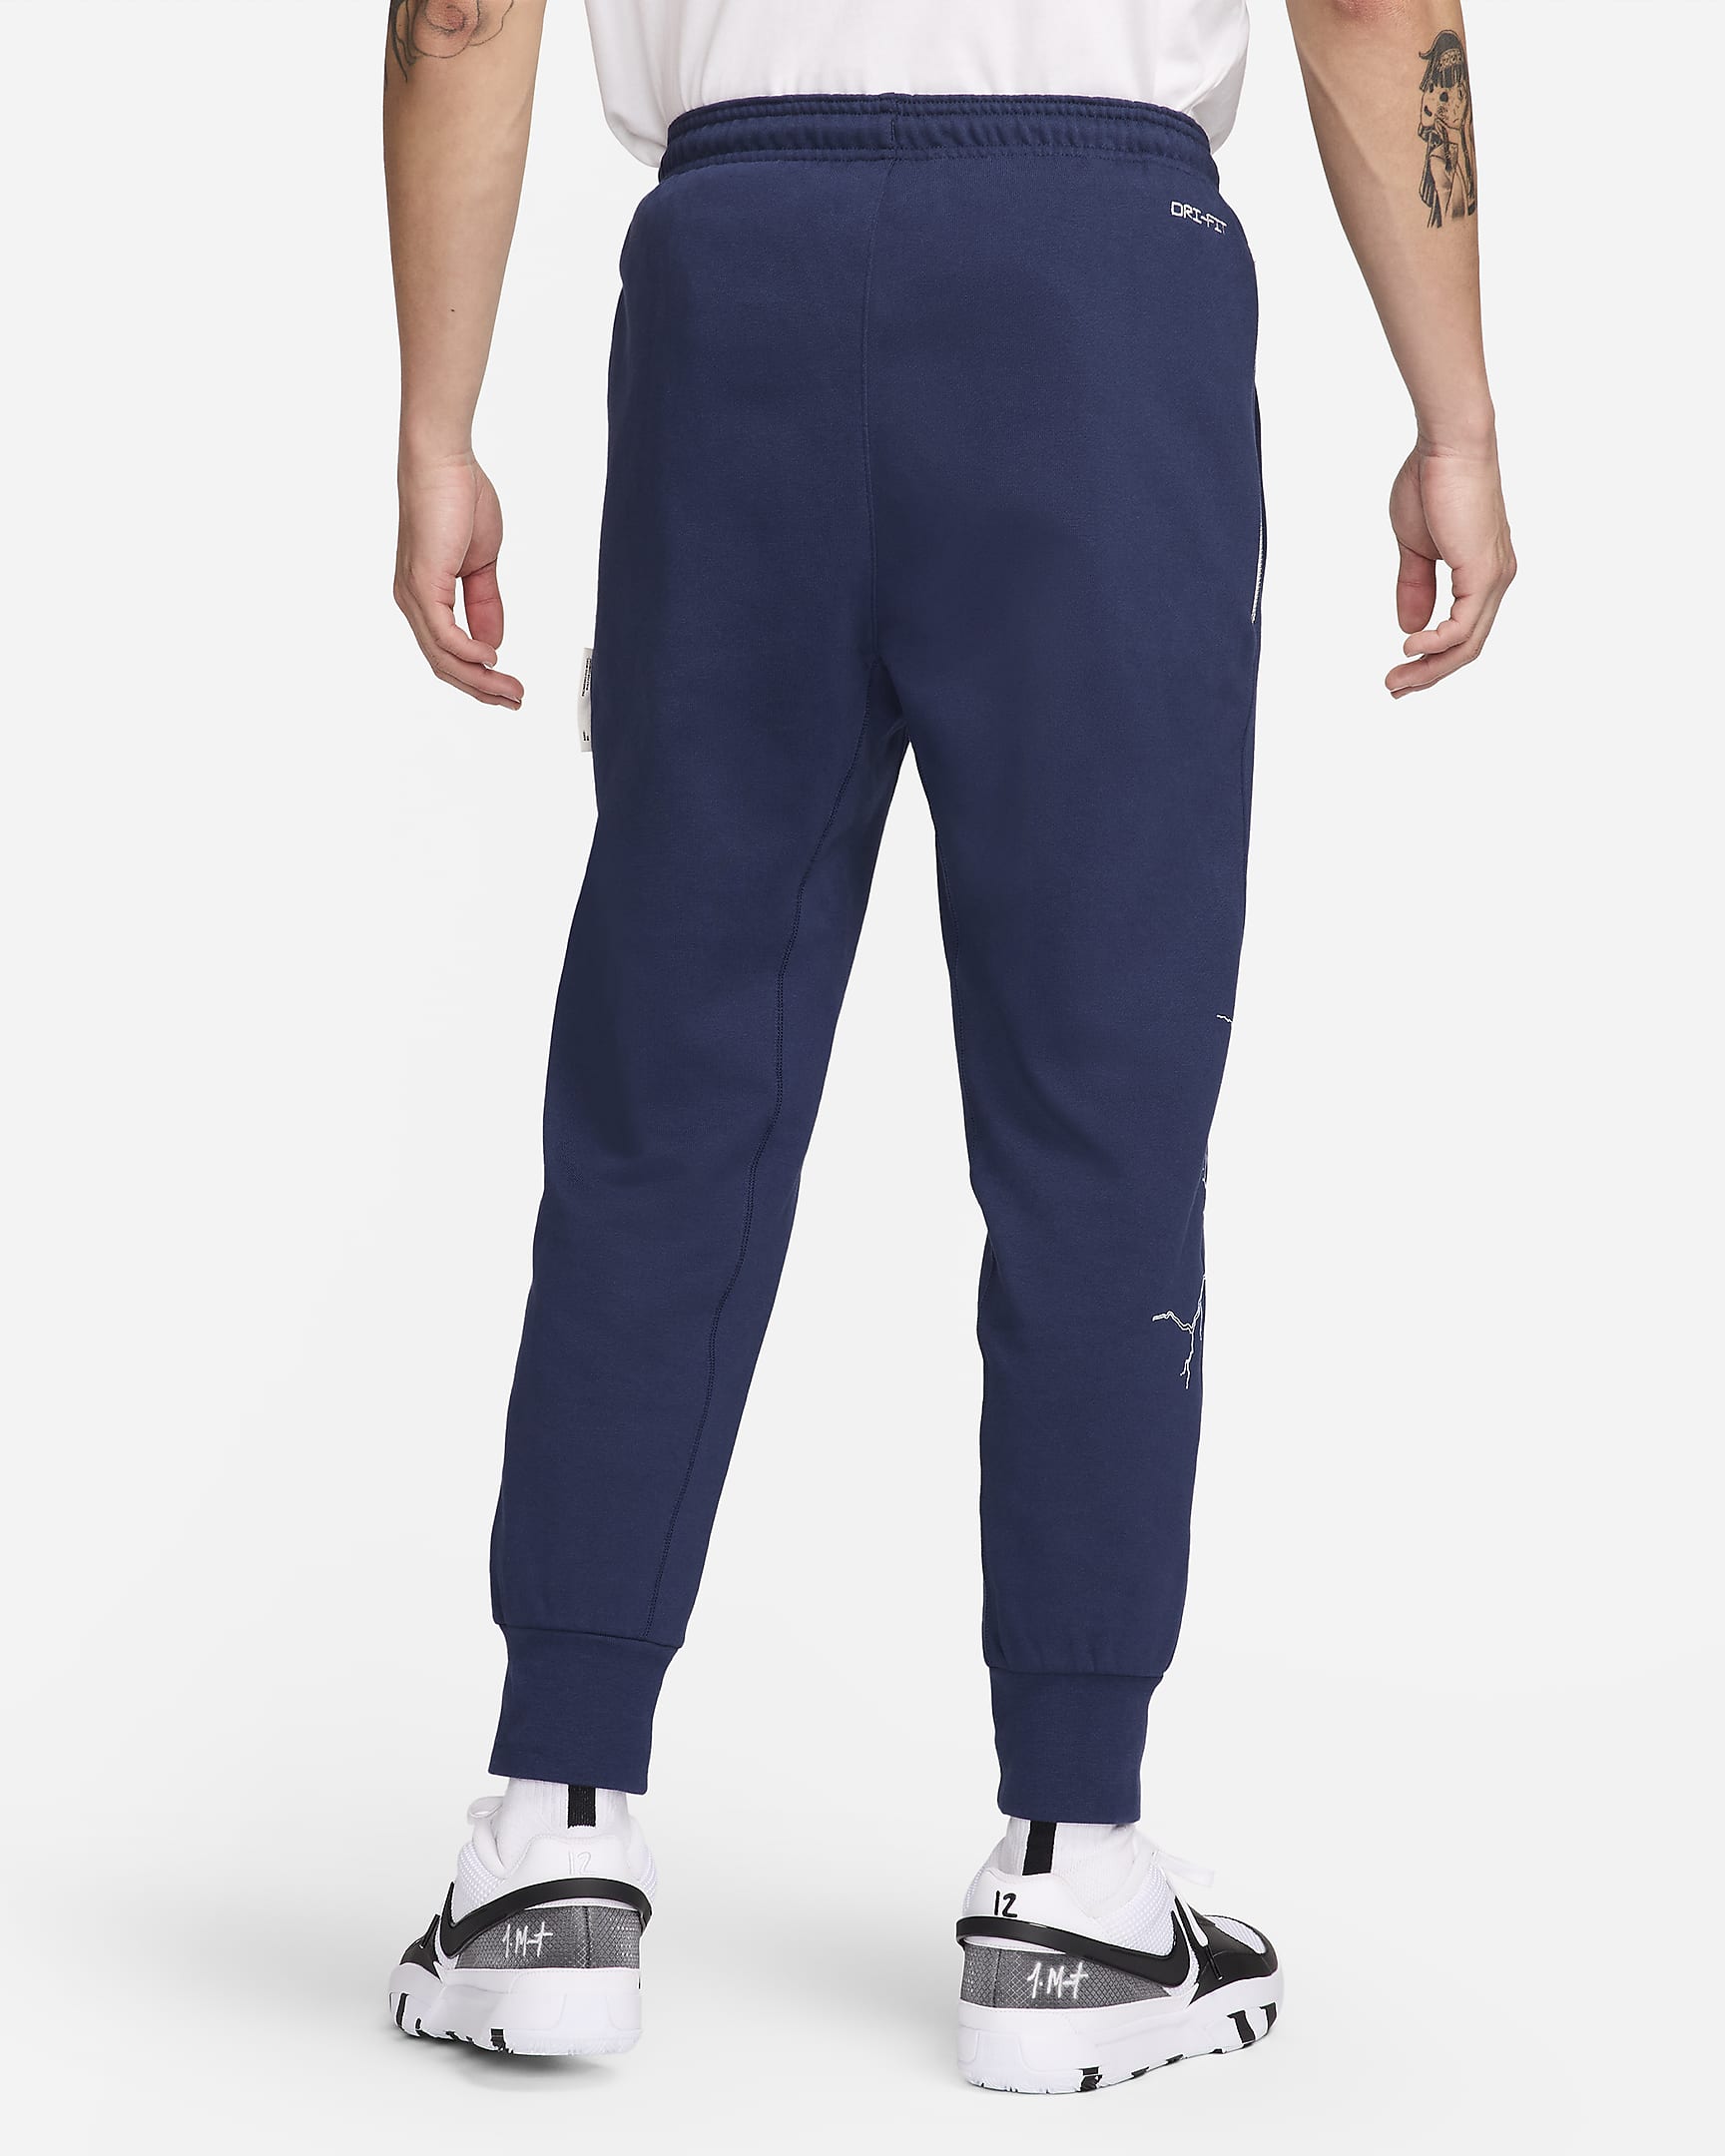 Ja Standard Issue Men's Dri-FIT Jogger Basketball Trousers. Nike IN